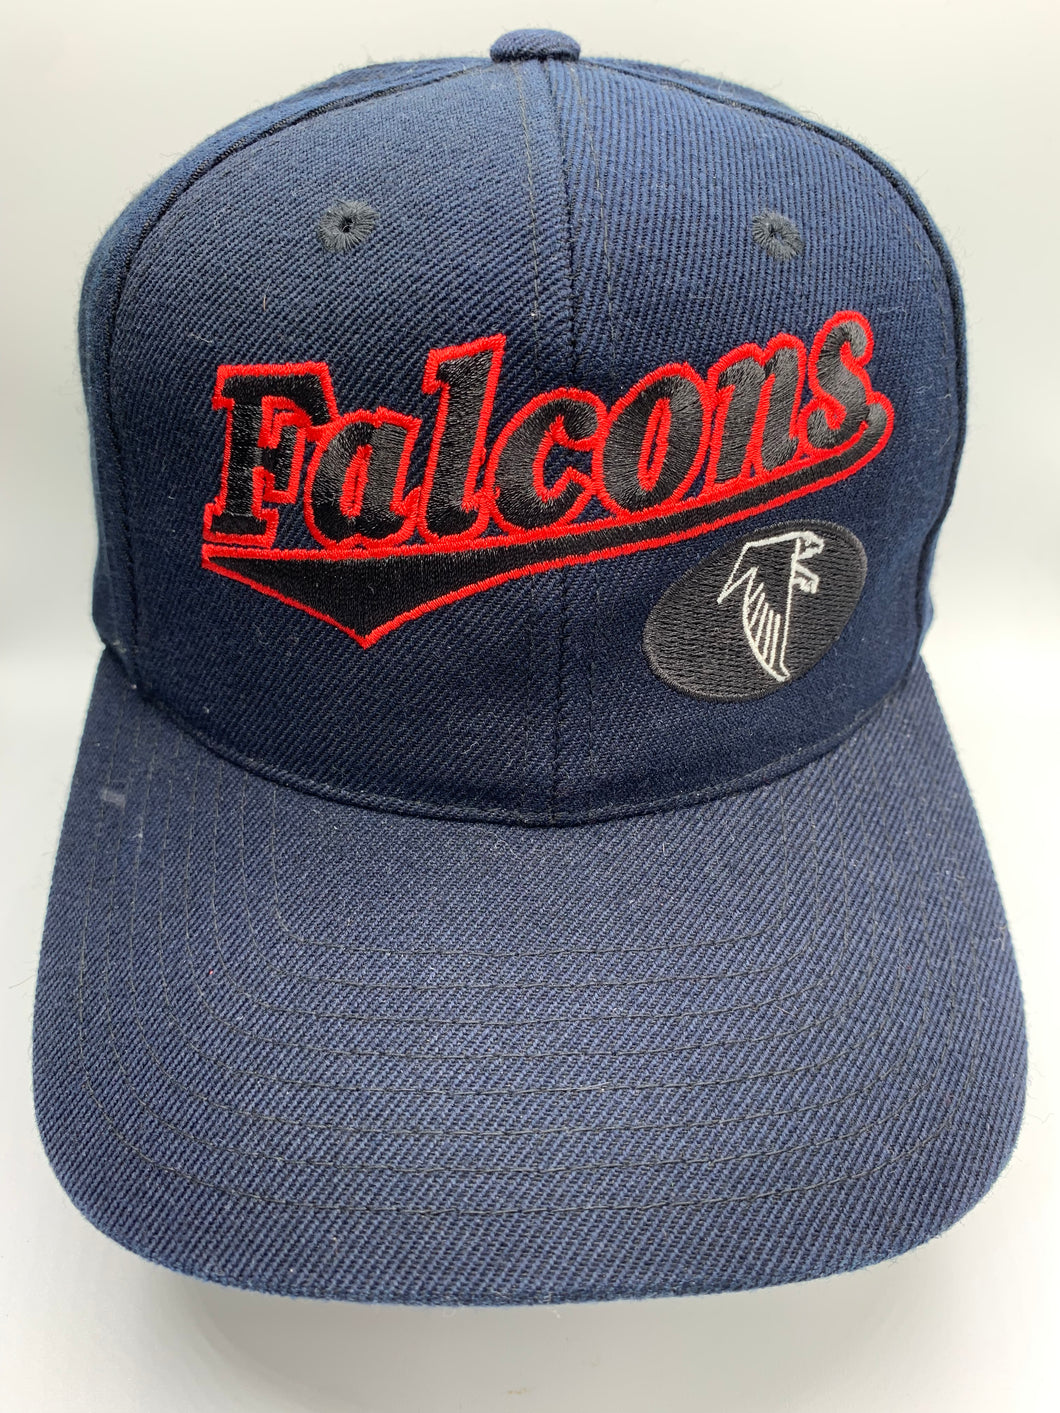 Vintage Atlanta Falcons Snapback Hat